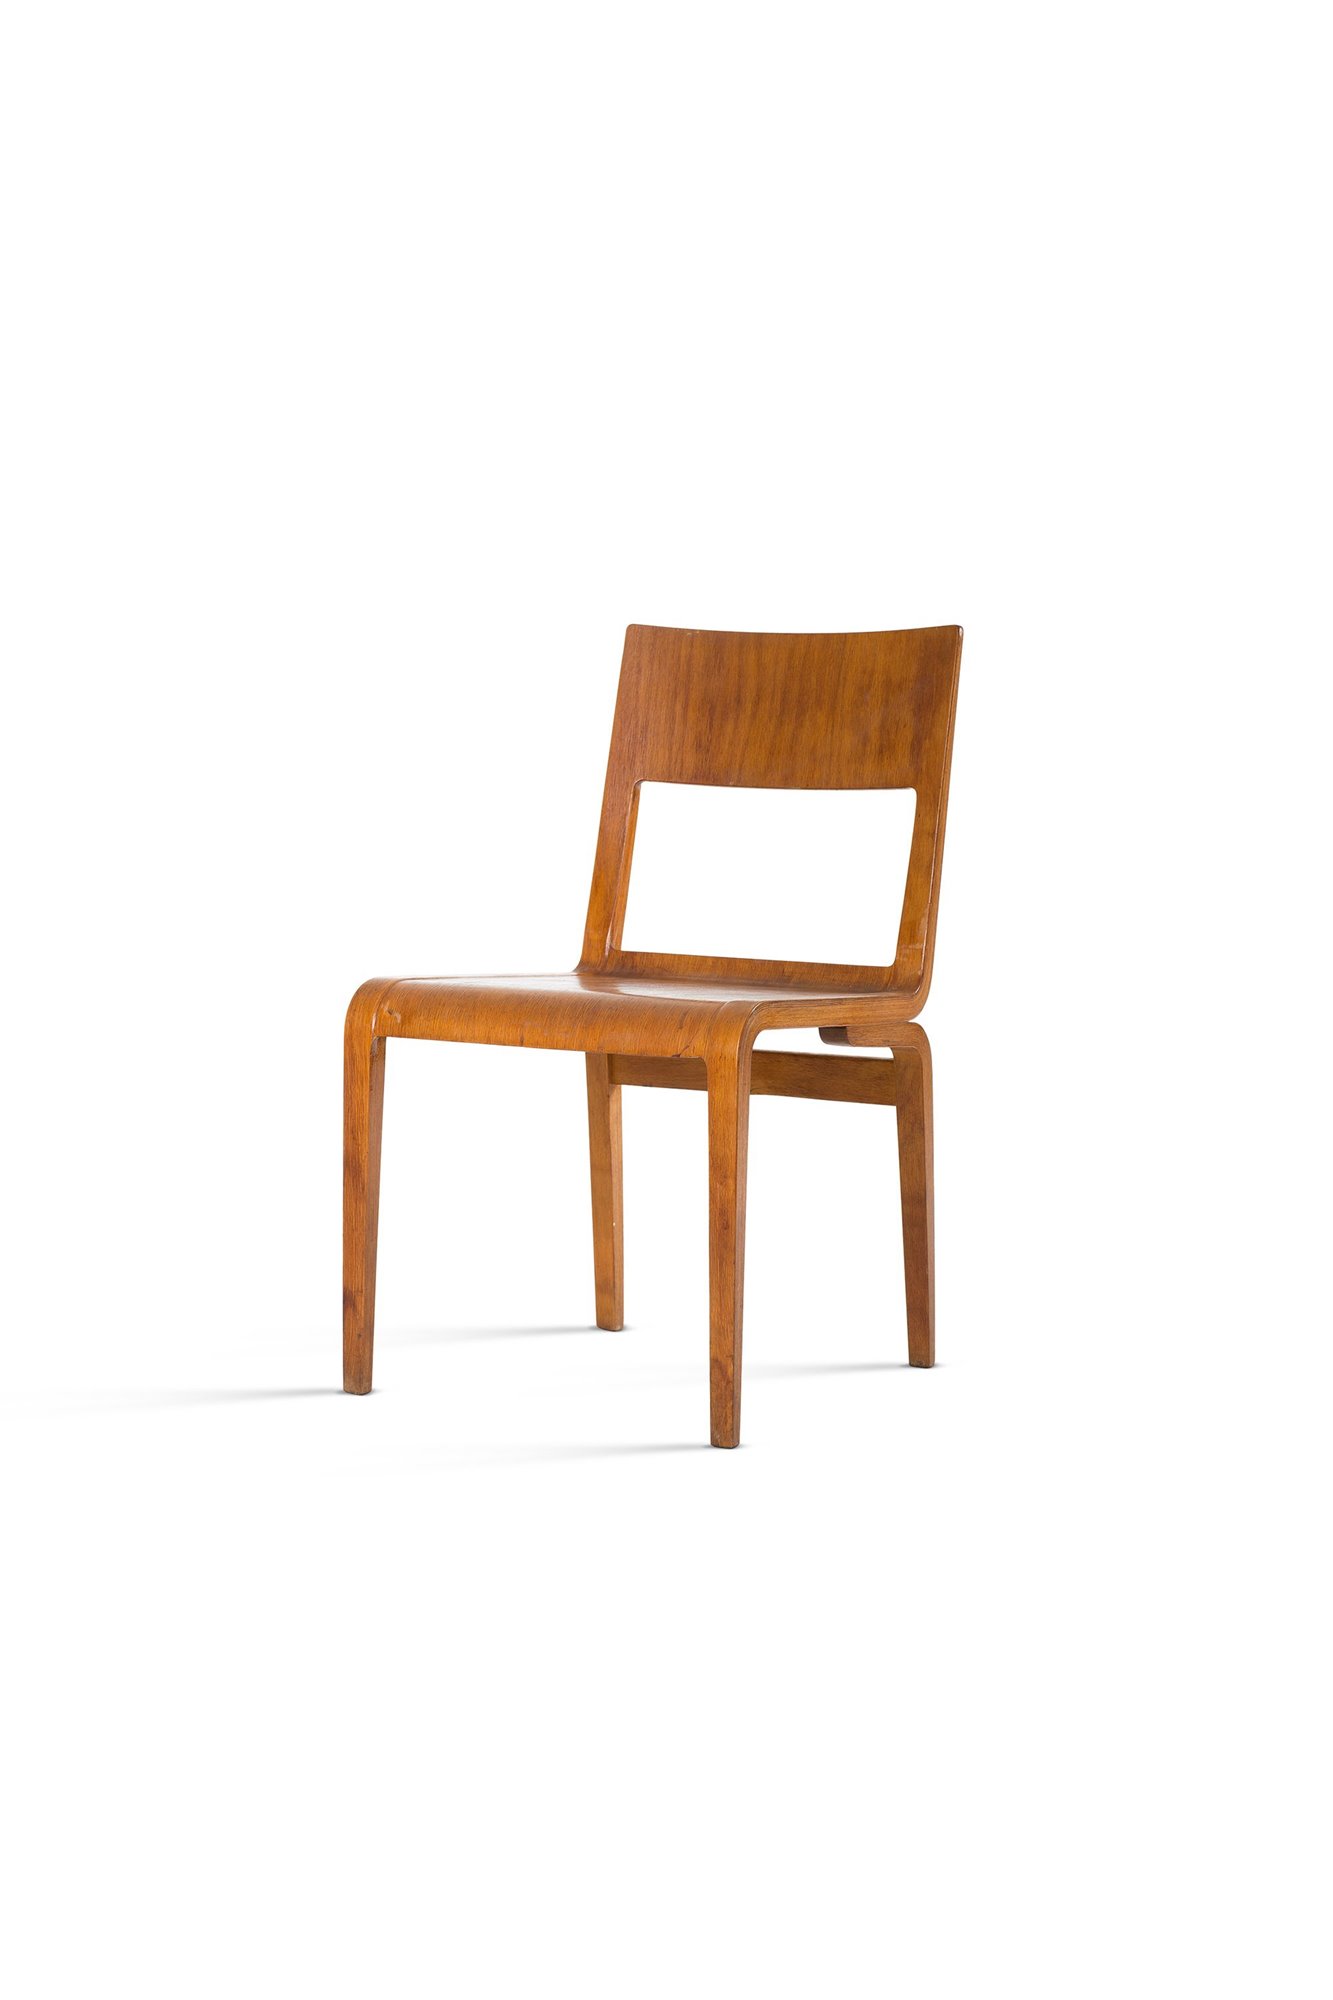 Erich Menzel chair1949 Vitra Design Museum photo Jürgen Hans